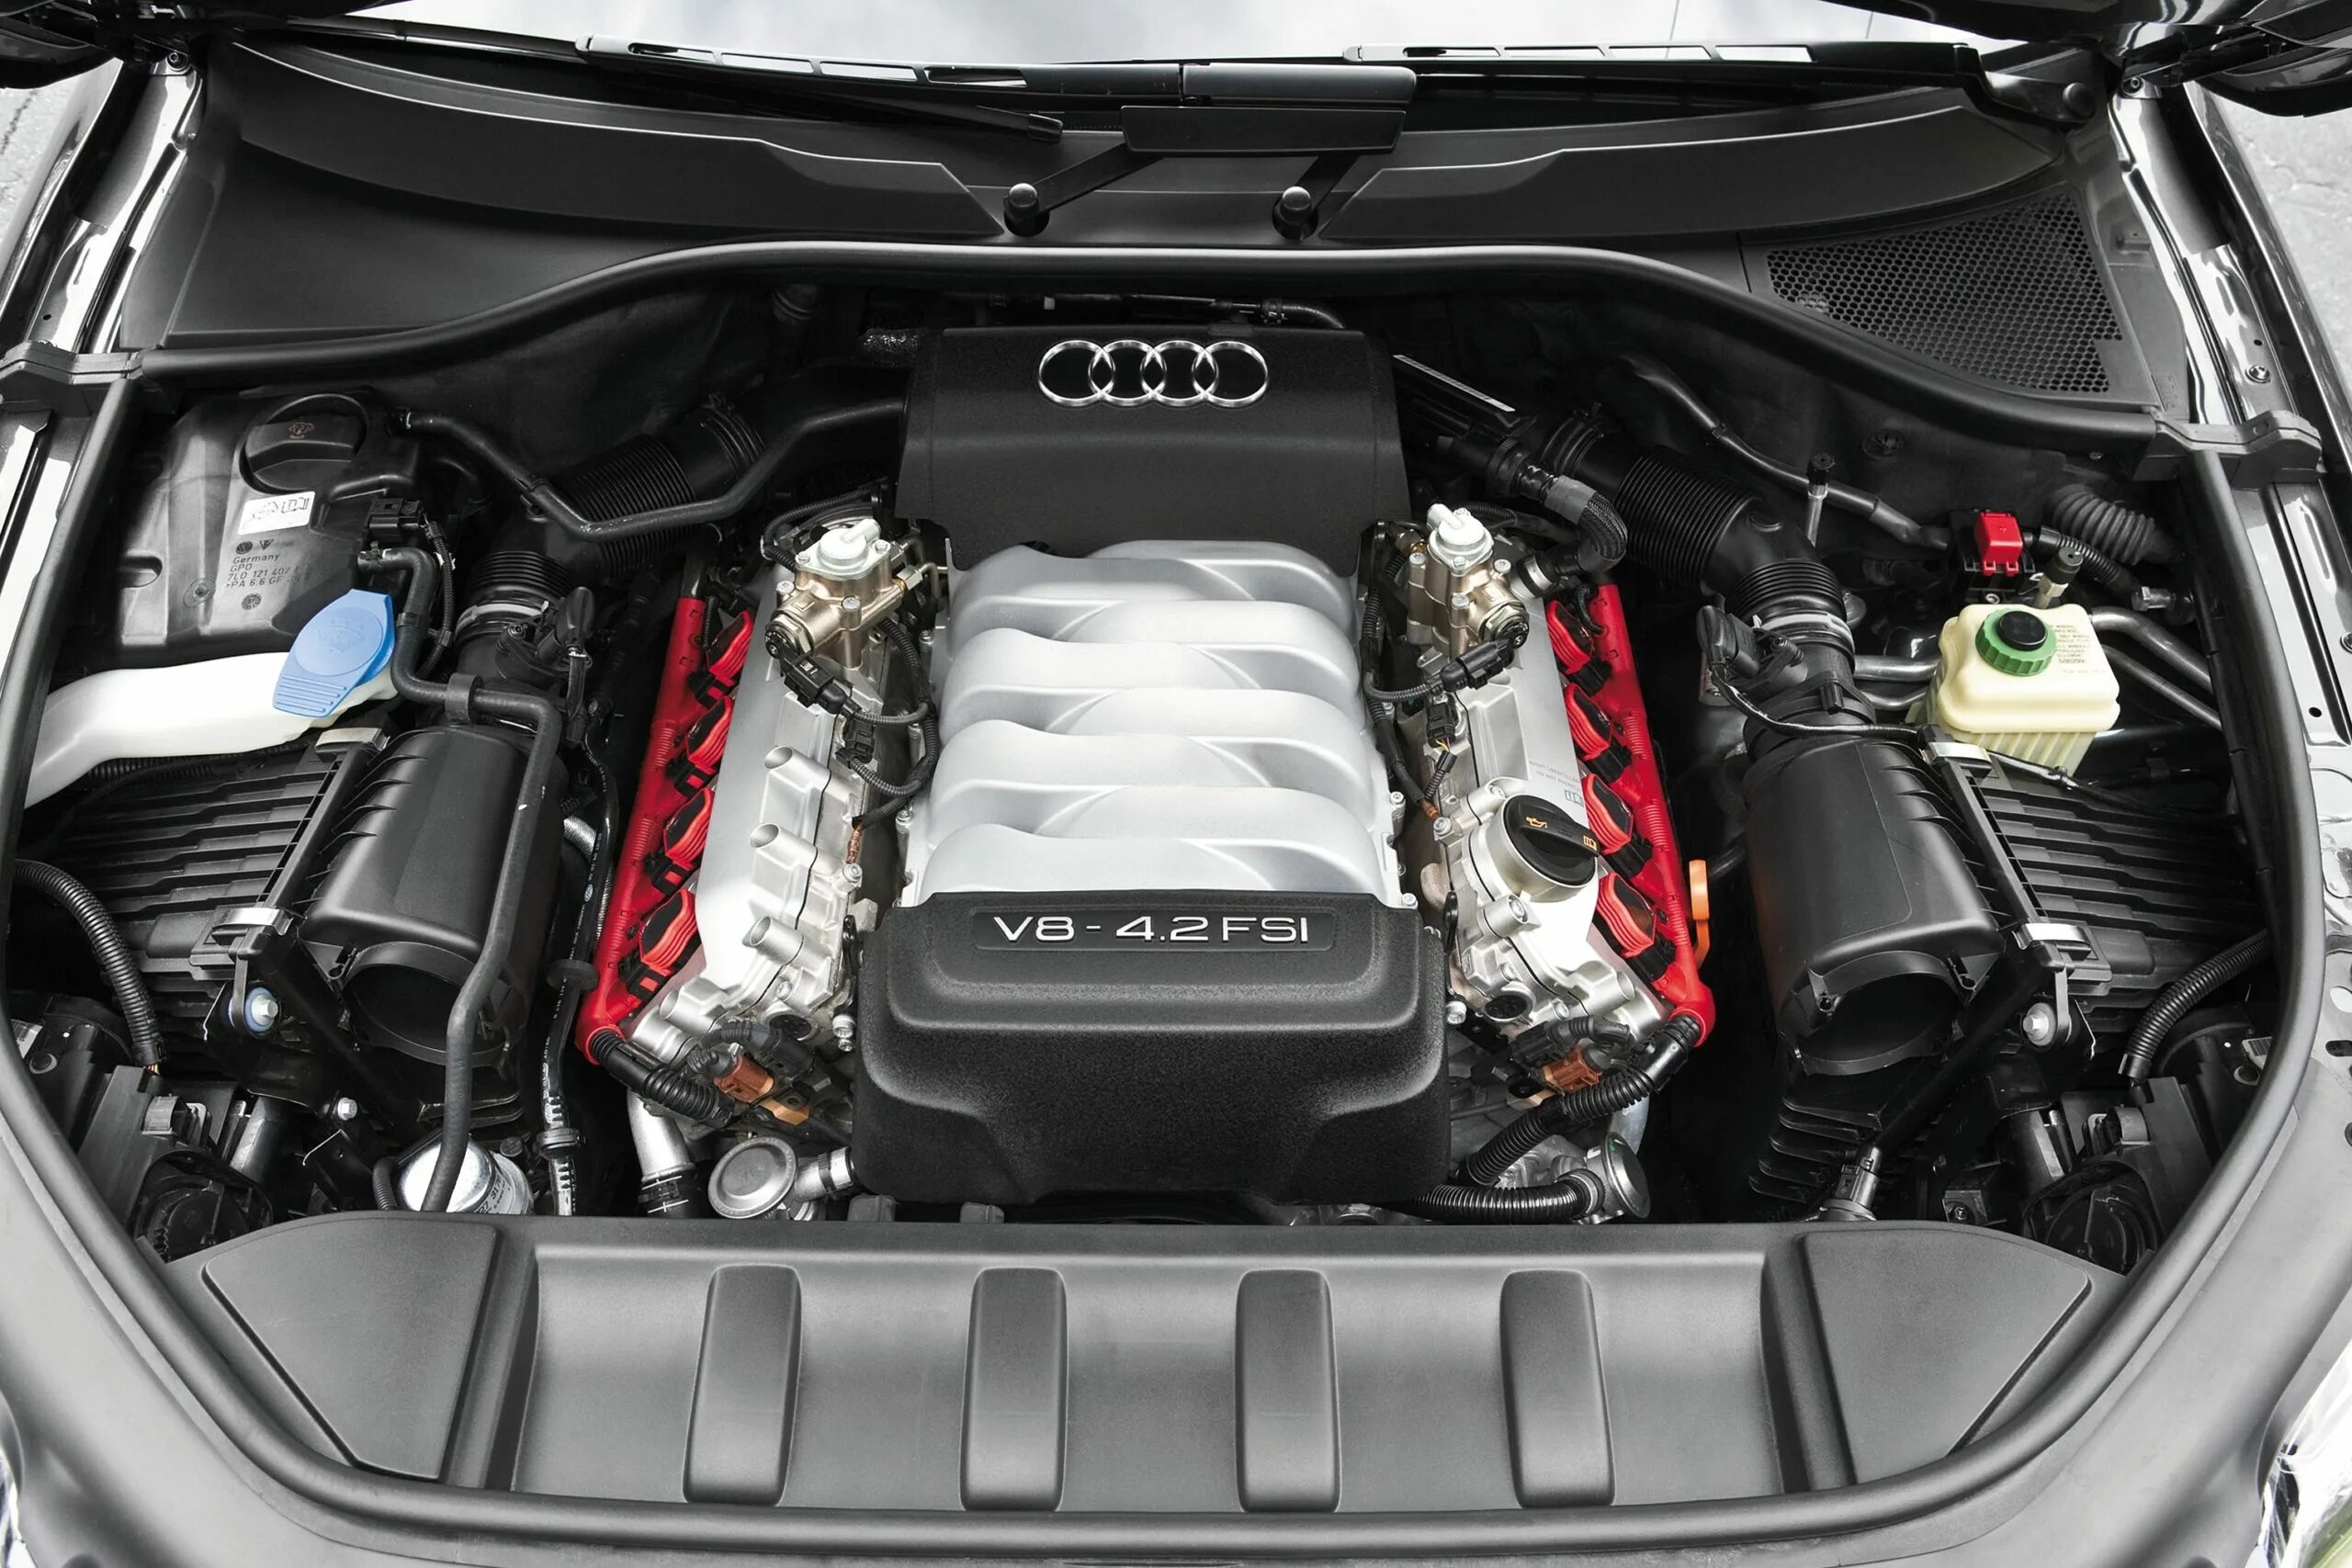 Ауди двиг. Audi q7 4.2 FSI. Мотор 4.2 Ауди q7. Q7 4.2 FSI мотор. Audi 4.2 Bar.